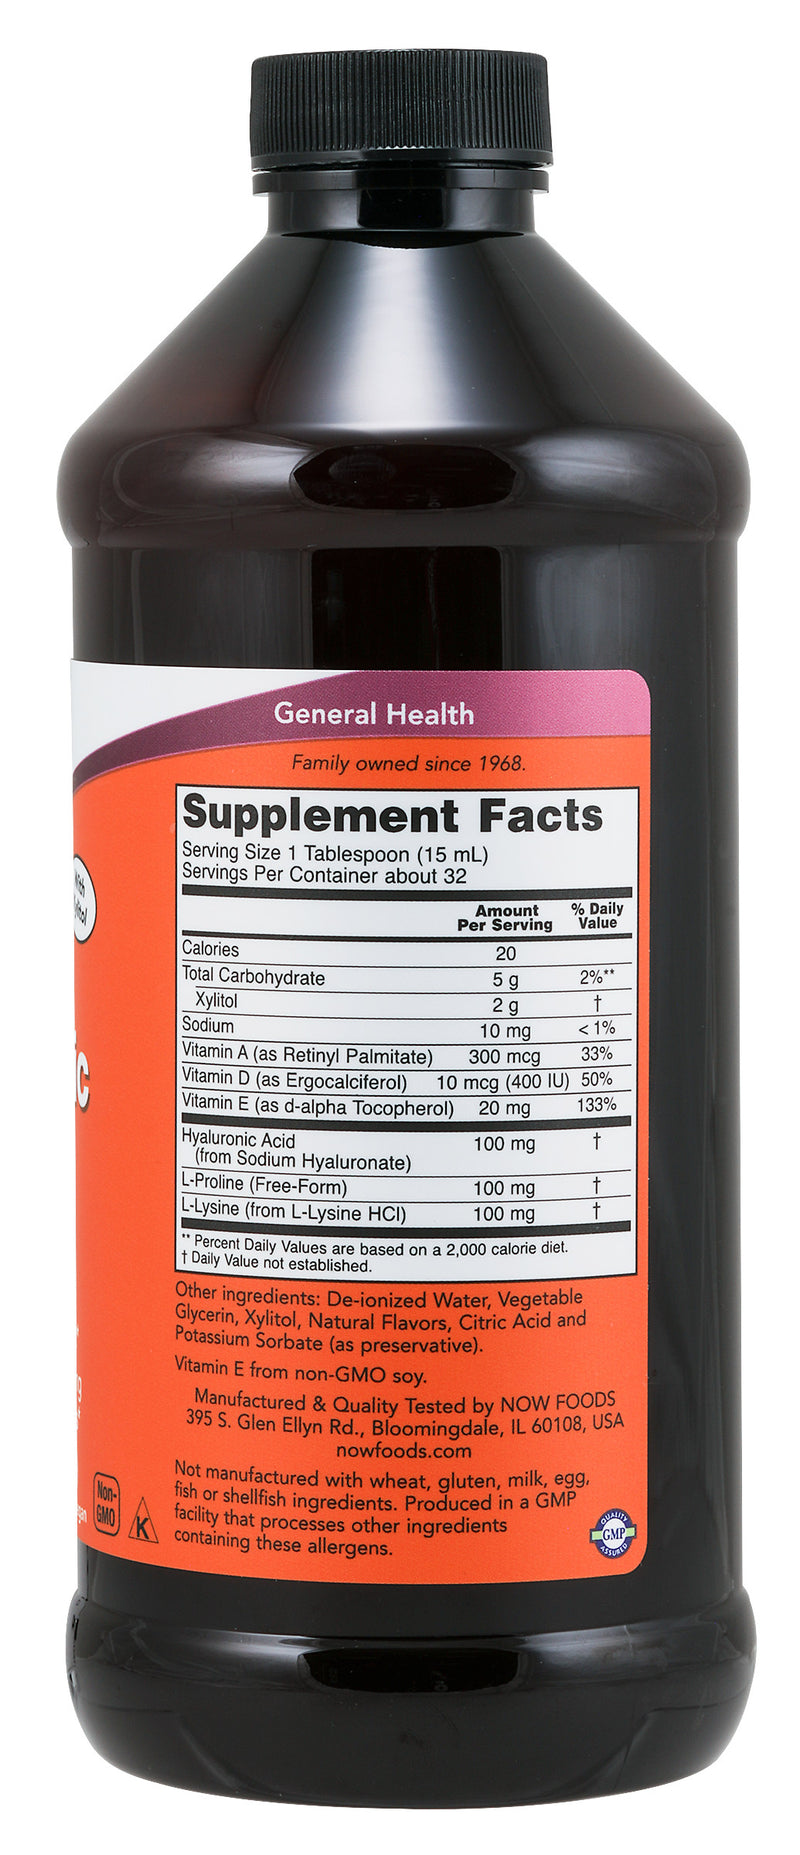 Liquid Hyaluronic Acid 16 fl oz (473 ml) | By Now Foods - Best Price